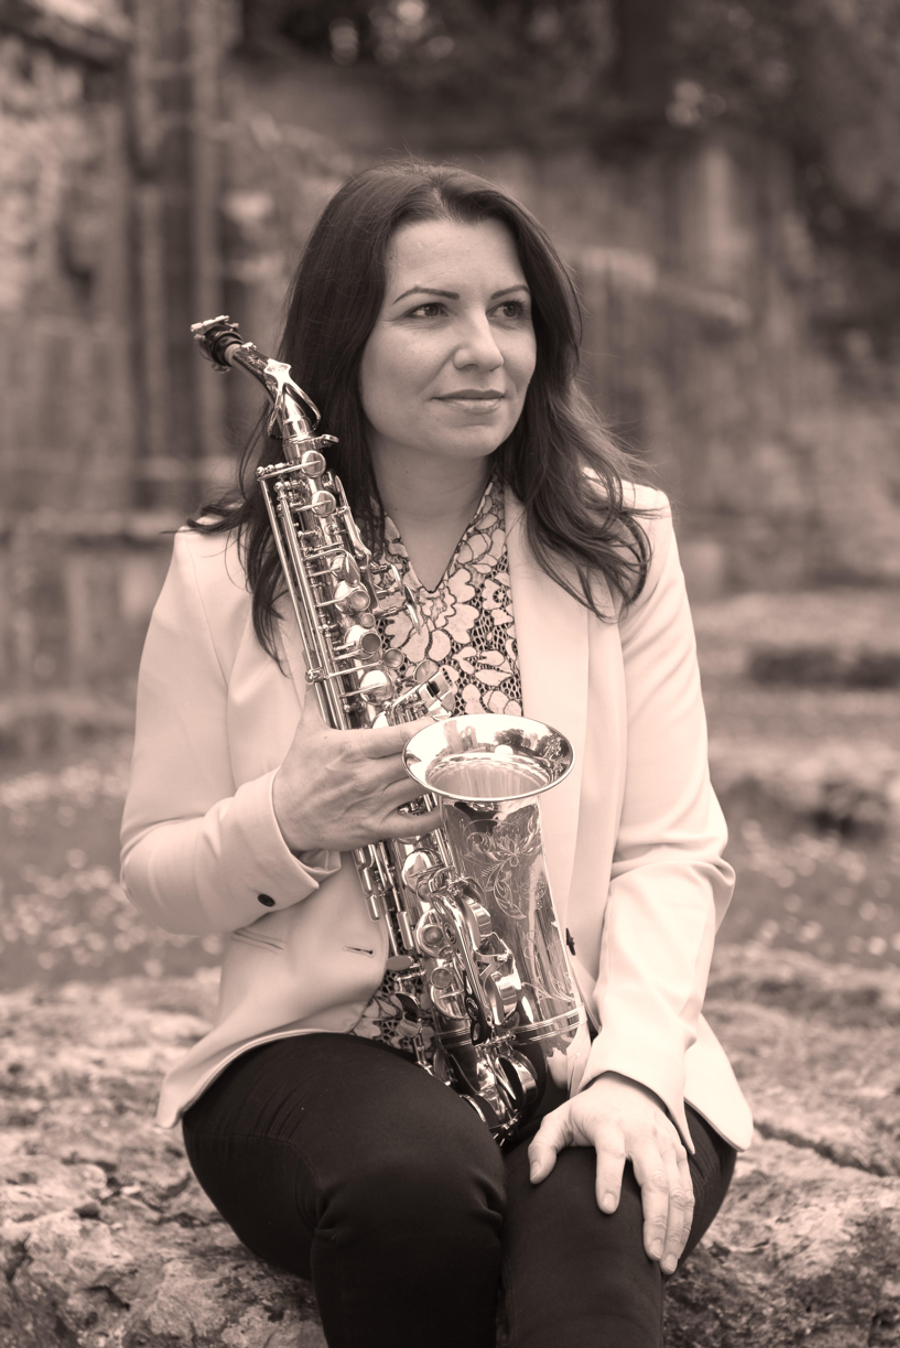 Véronique TARDIF Photo 2 - Ambassadrice Ligature JLV pour saxophone